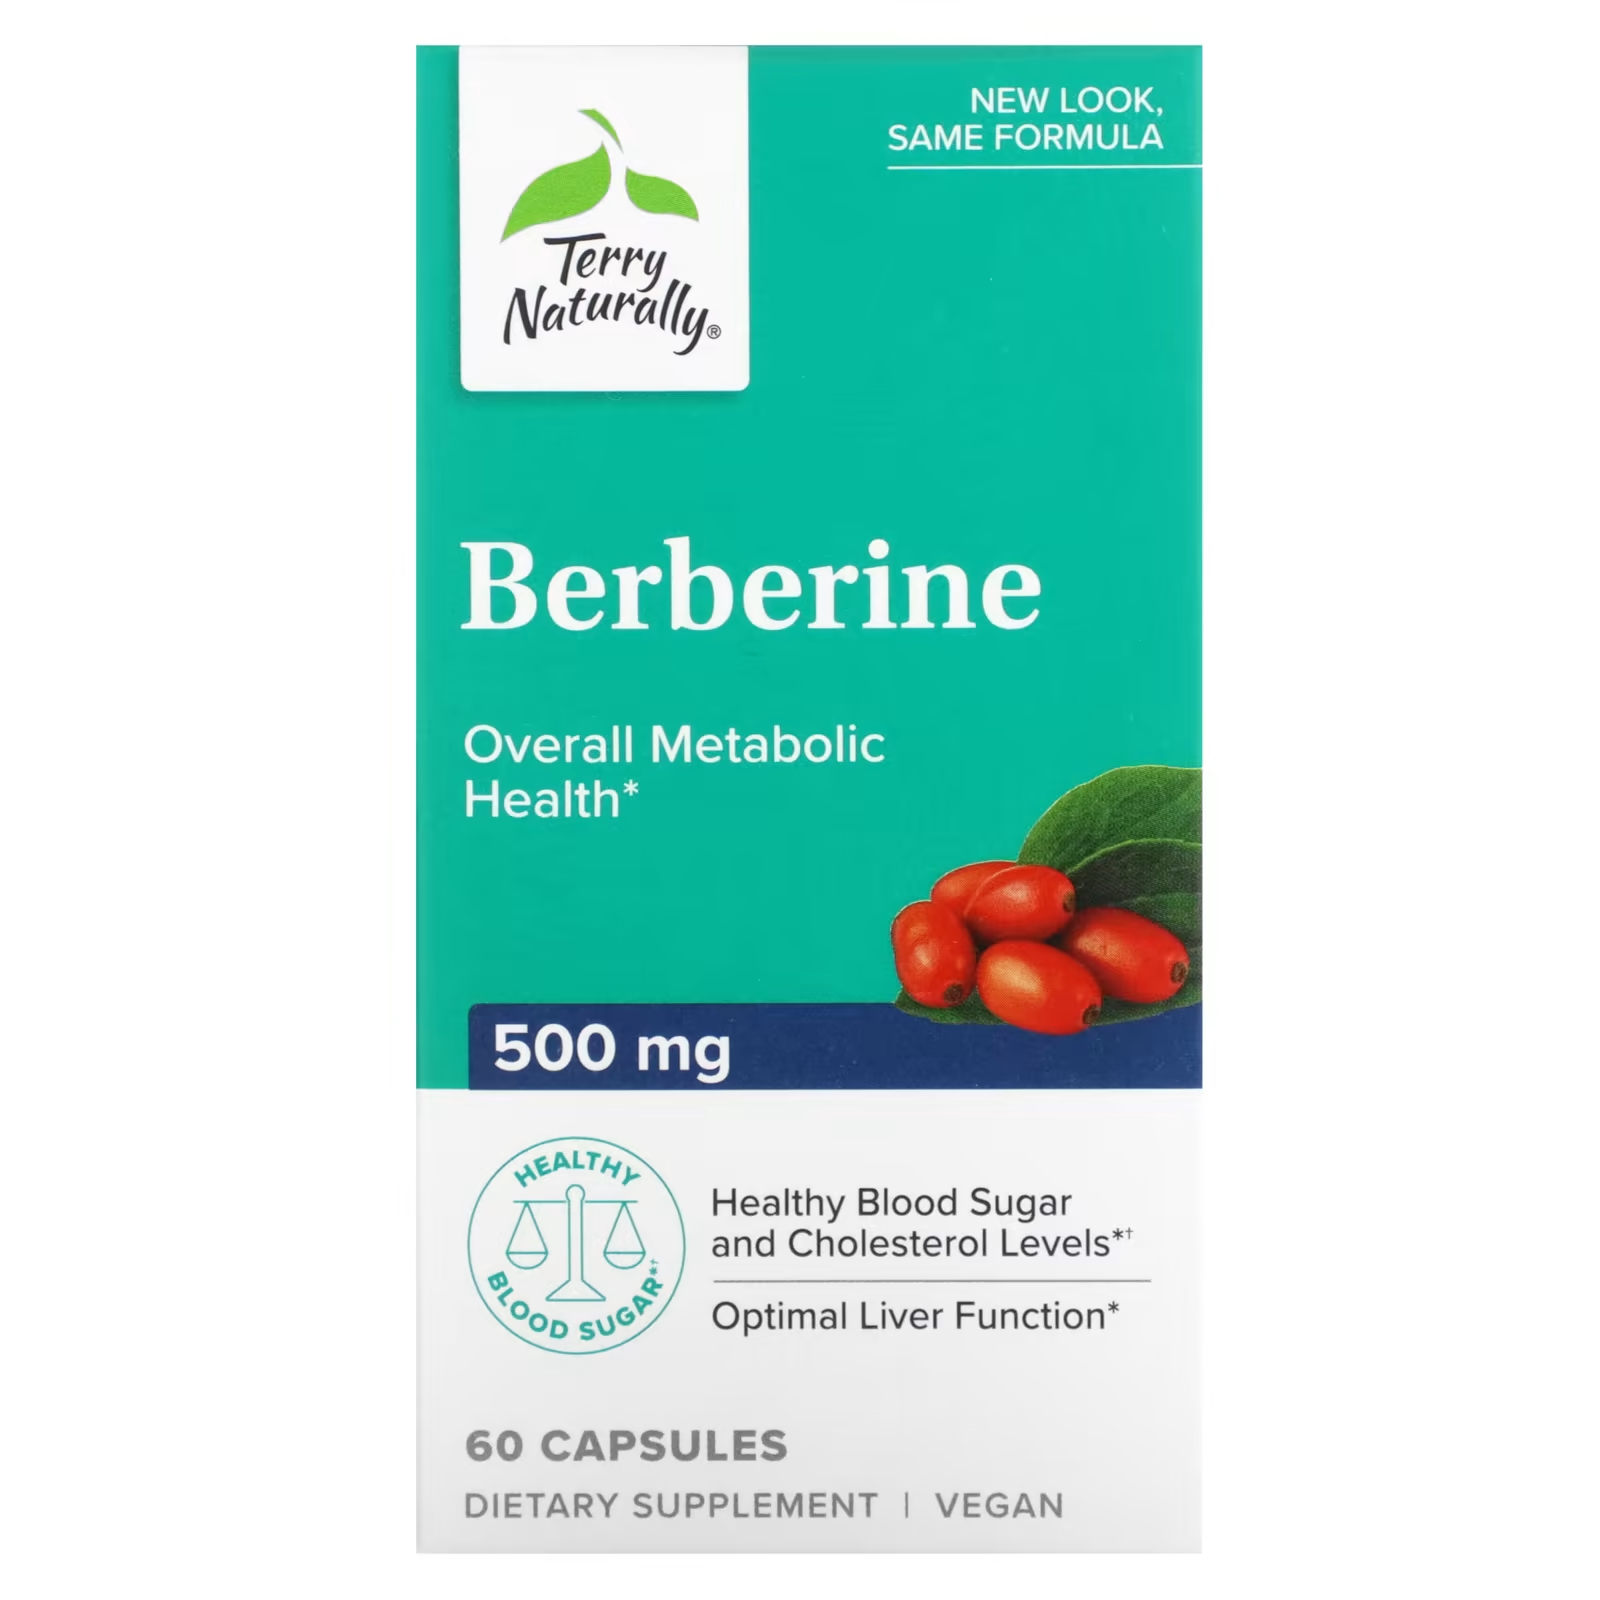 Terry Naturally Берберин 500 мг 60 капсул terry naturally берберин metx 500 мг 60 капсул